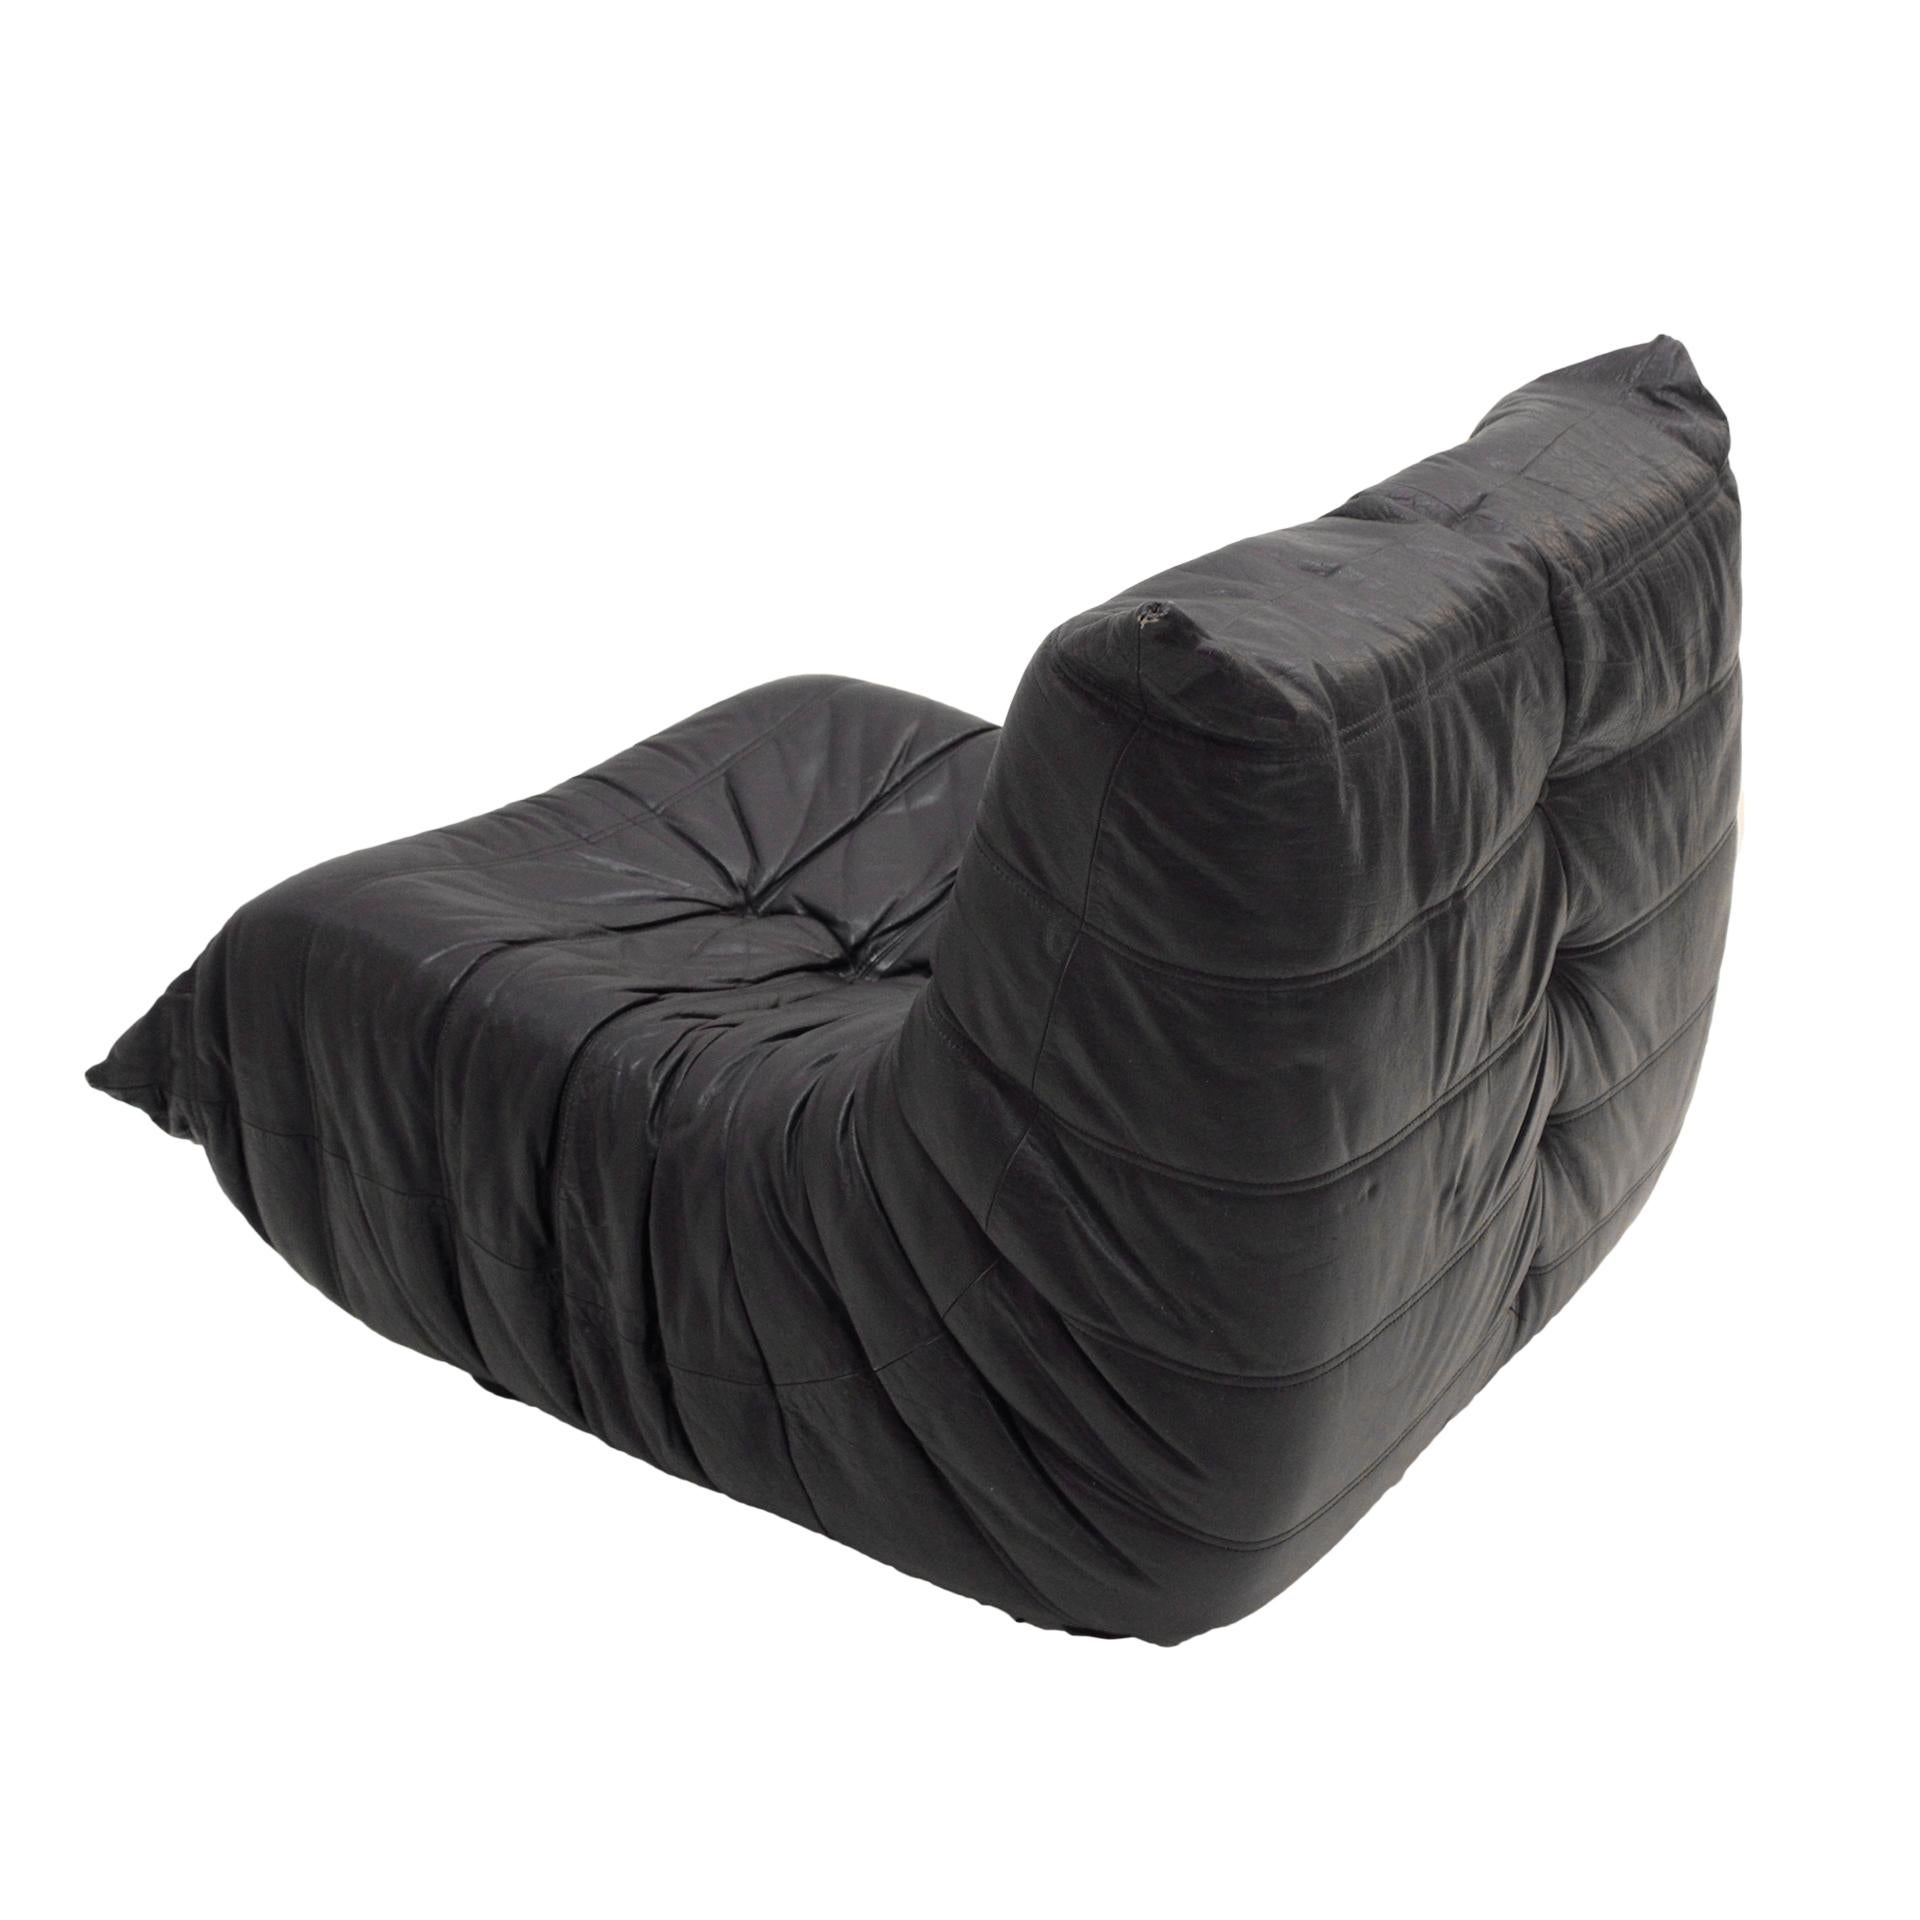 Late 20th Century Original Ligne Roset Togo Black Leather Lounge Chair Designed by Michel Ducaroy